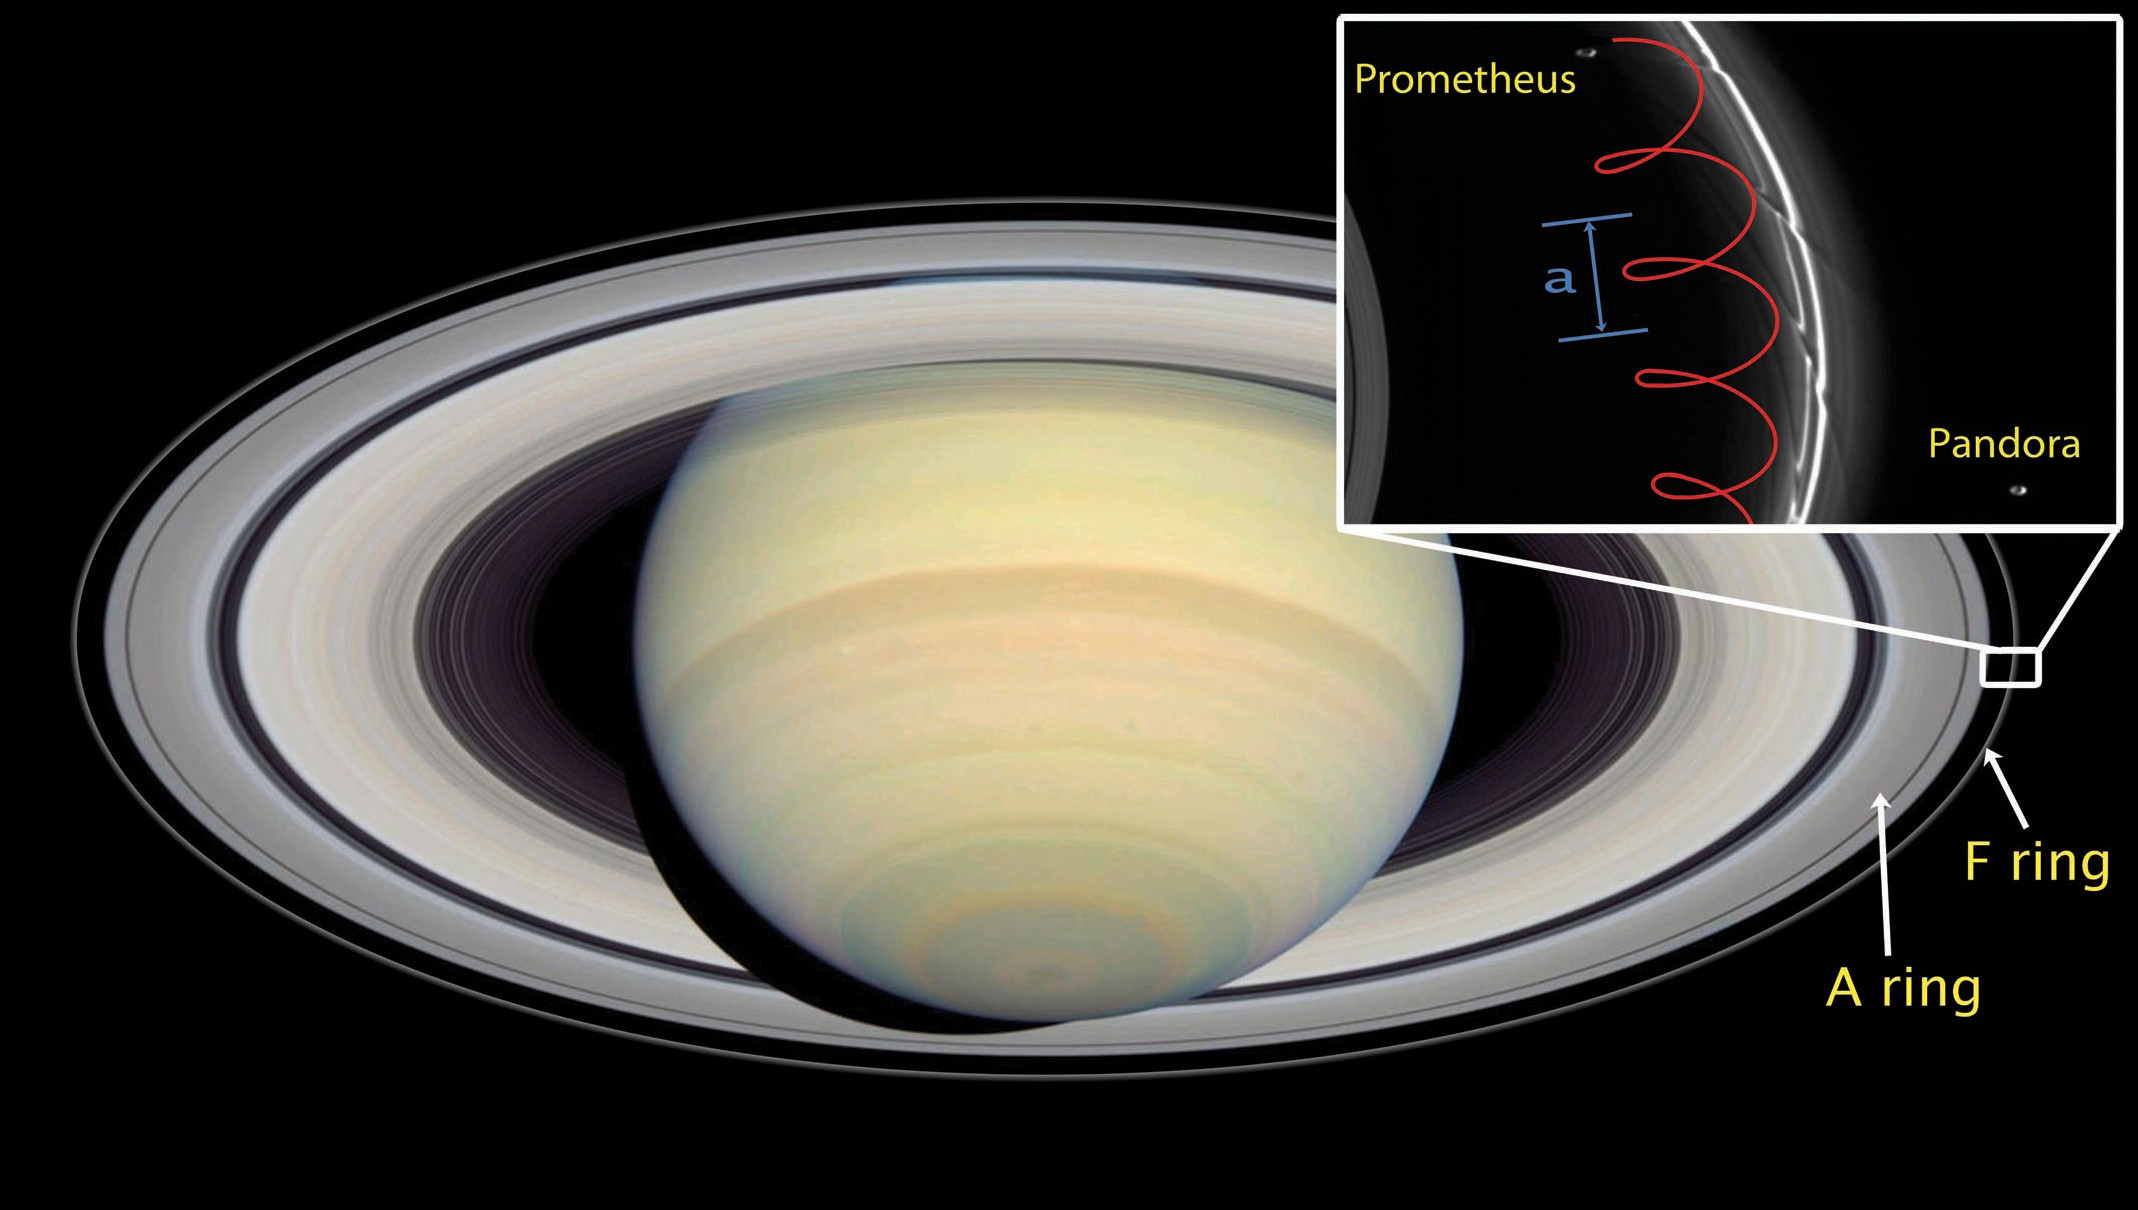 Saturn's rings glow in new image captured by James Webb telescope